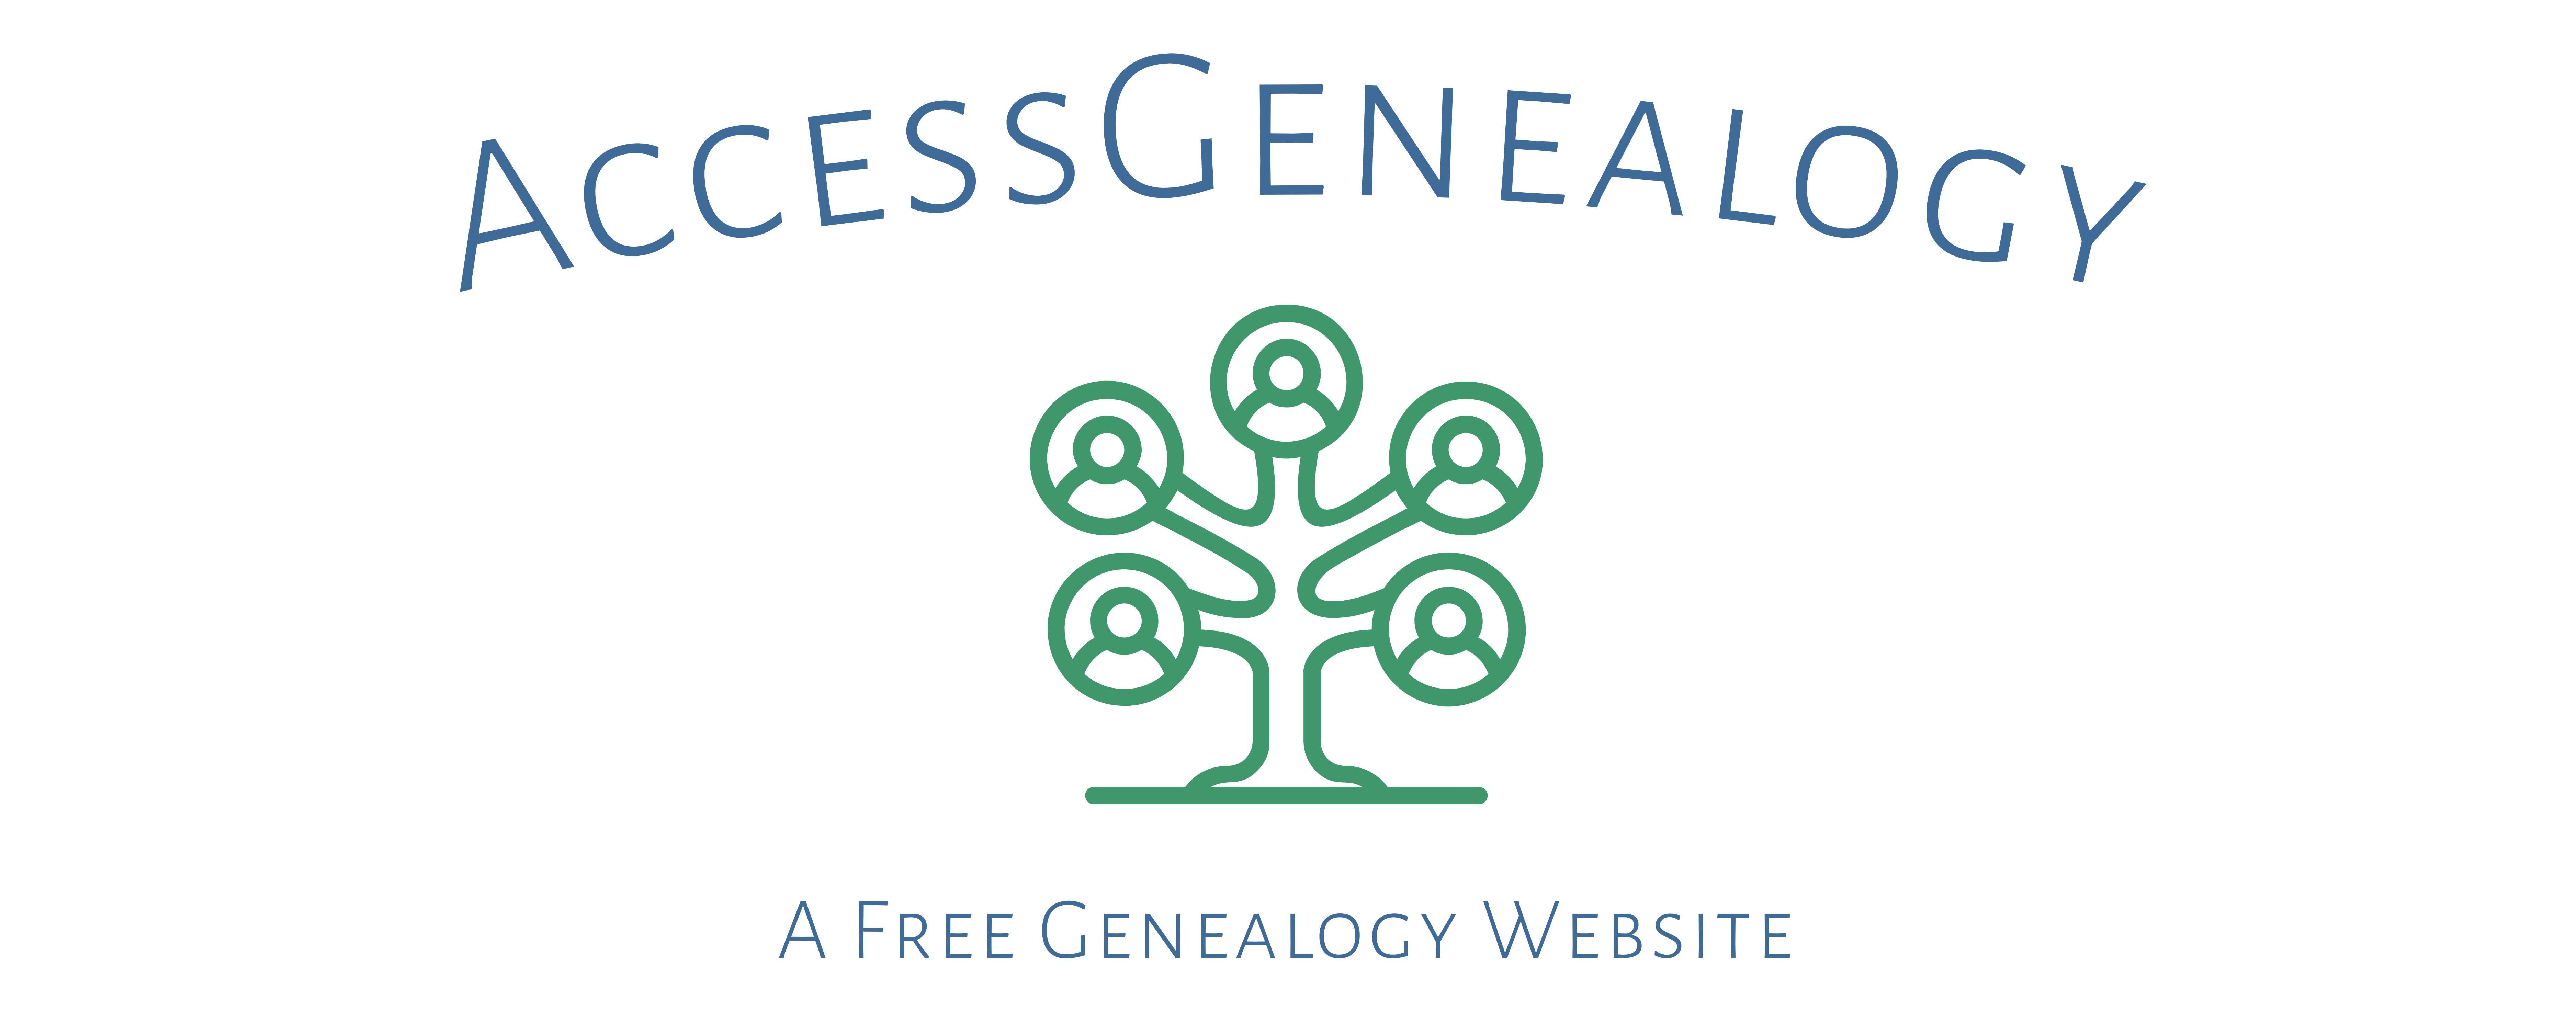 Accessgenealogy